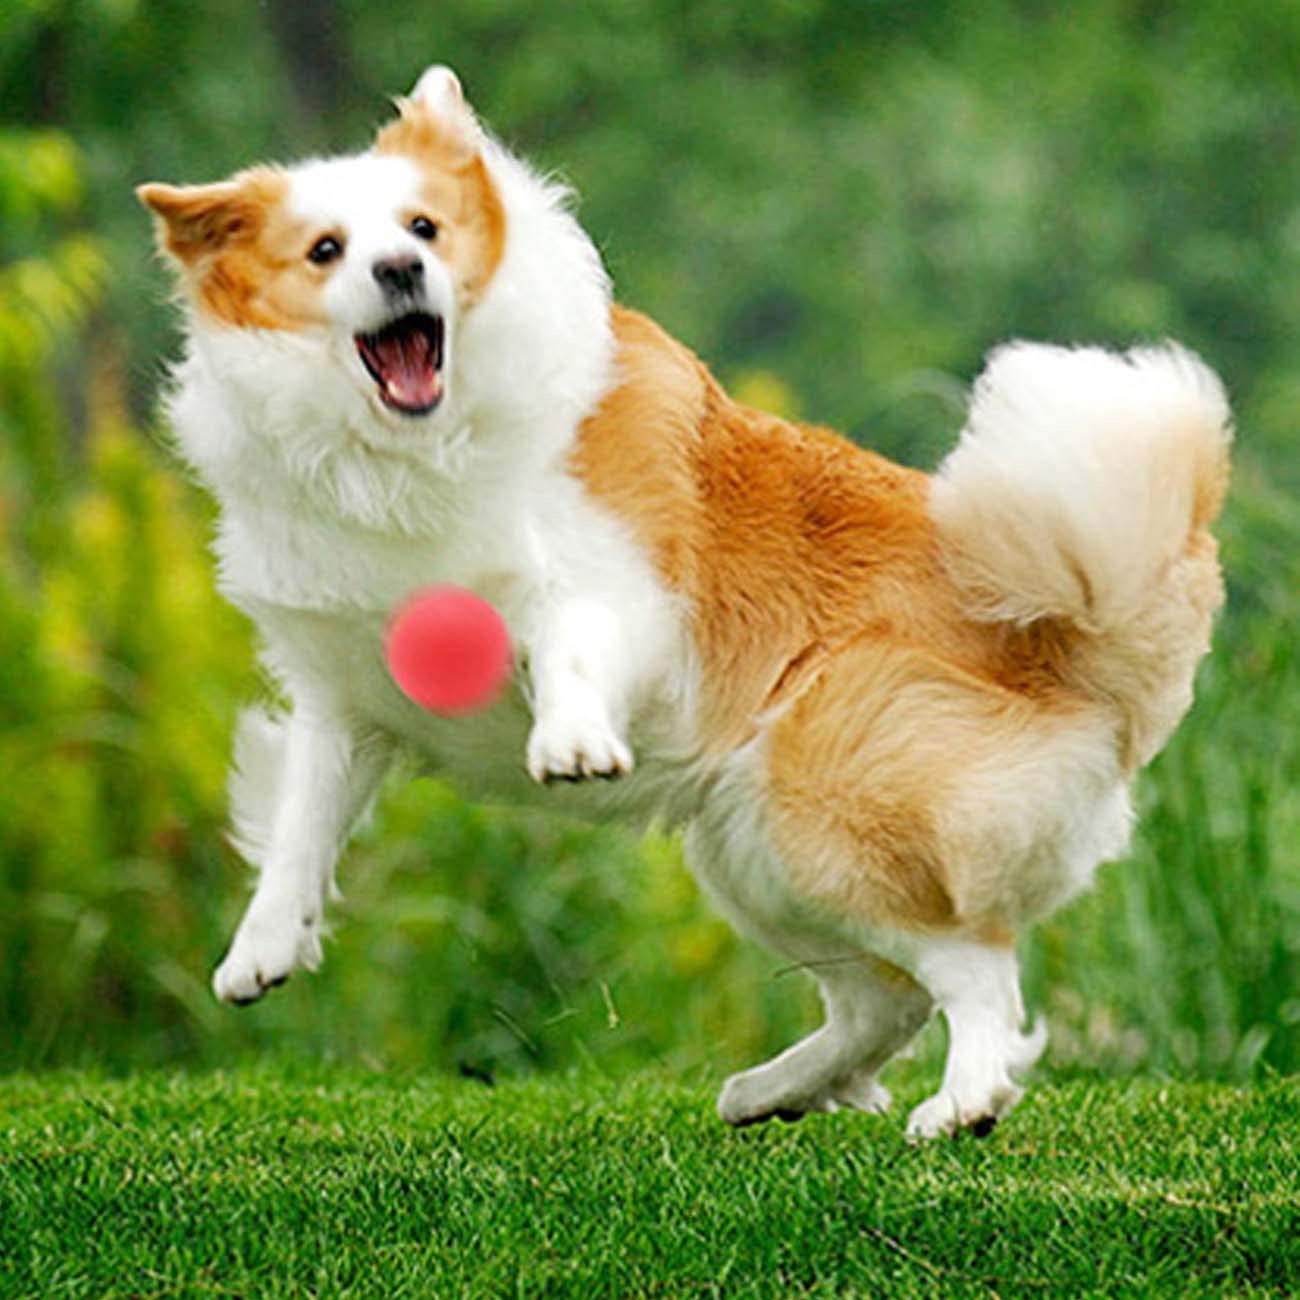  Pelota de juguete pelota de entrenamiento de mascotas caucho sólido bola elástica mordedura de perro resistente sólido juguete interactivo pelota que bota de goma para perros un grupo de tres 